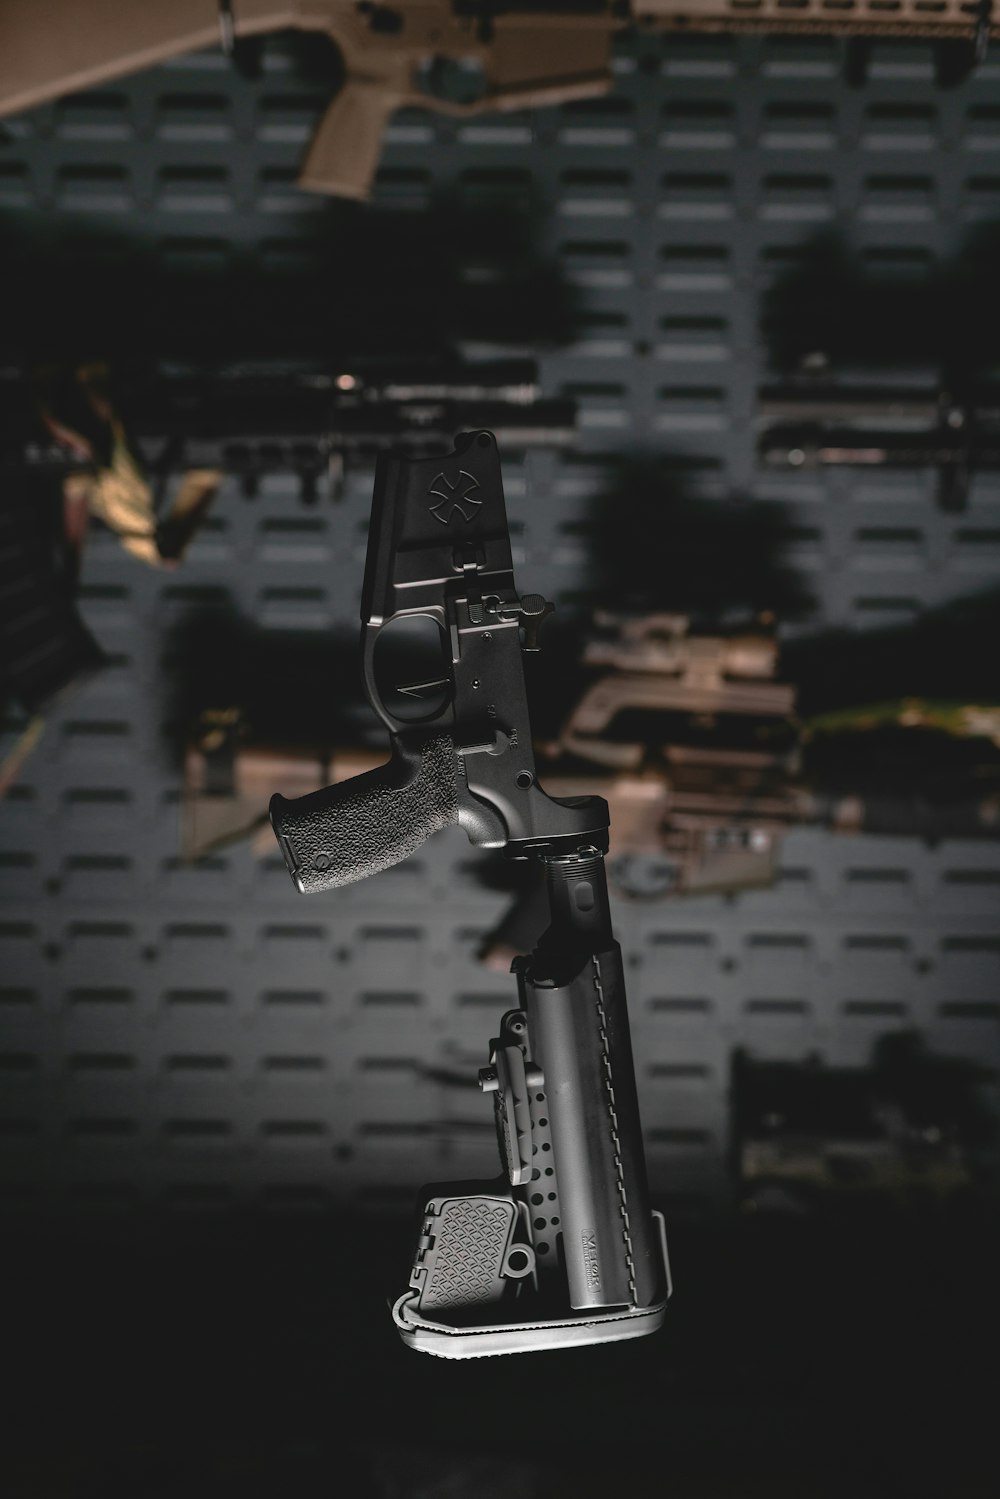 a close up of a gun on a tripod